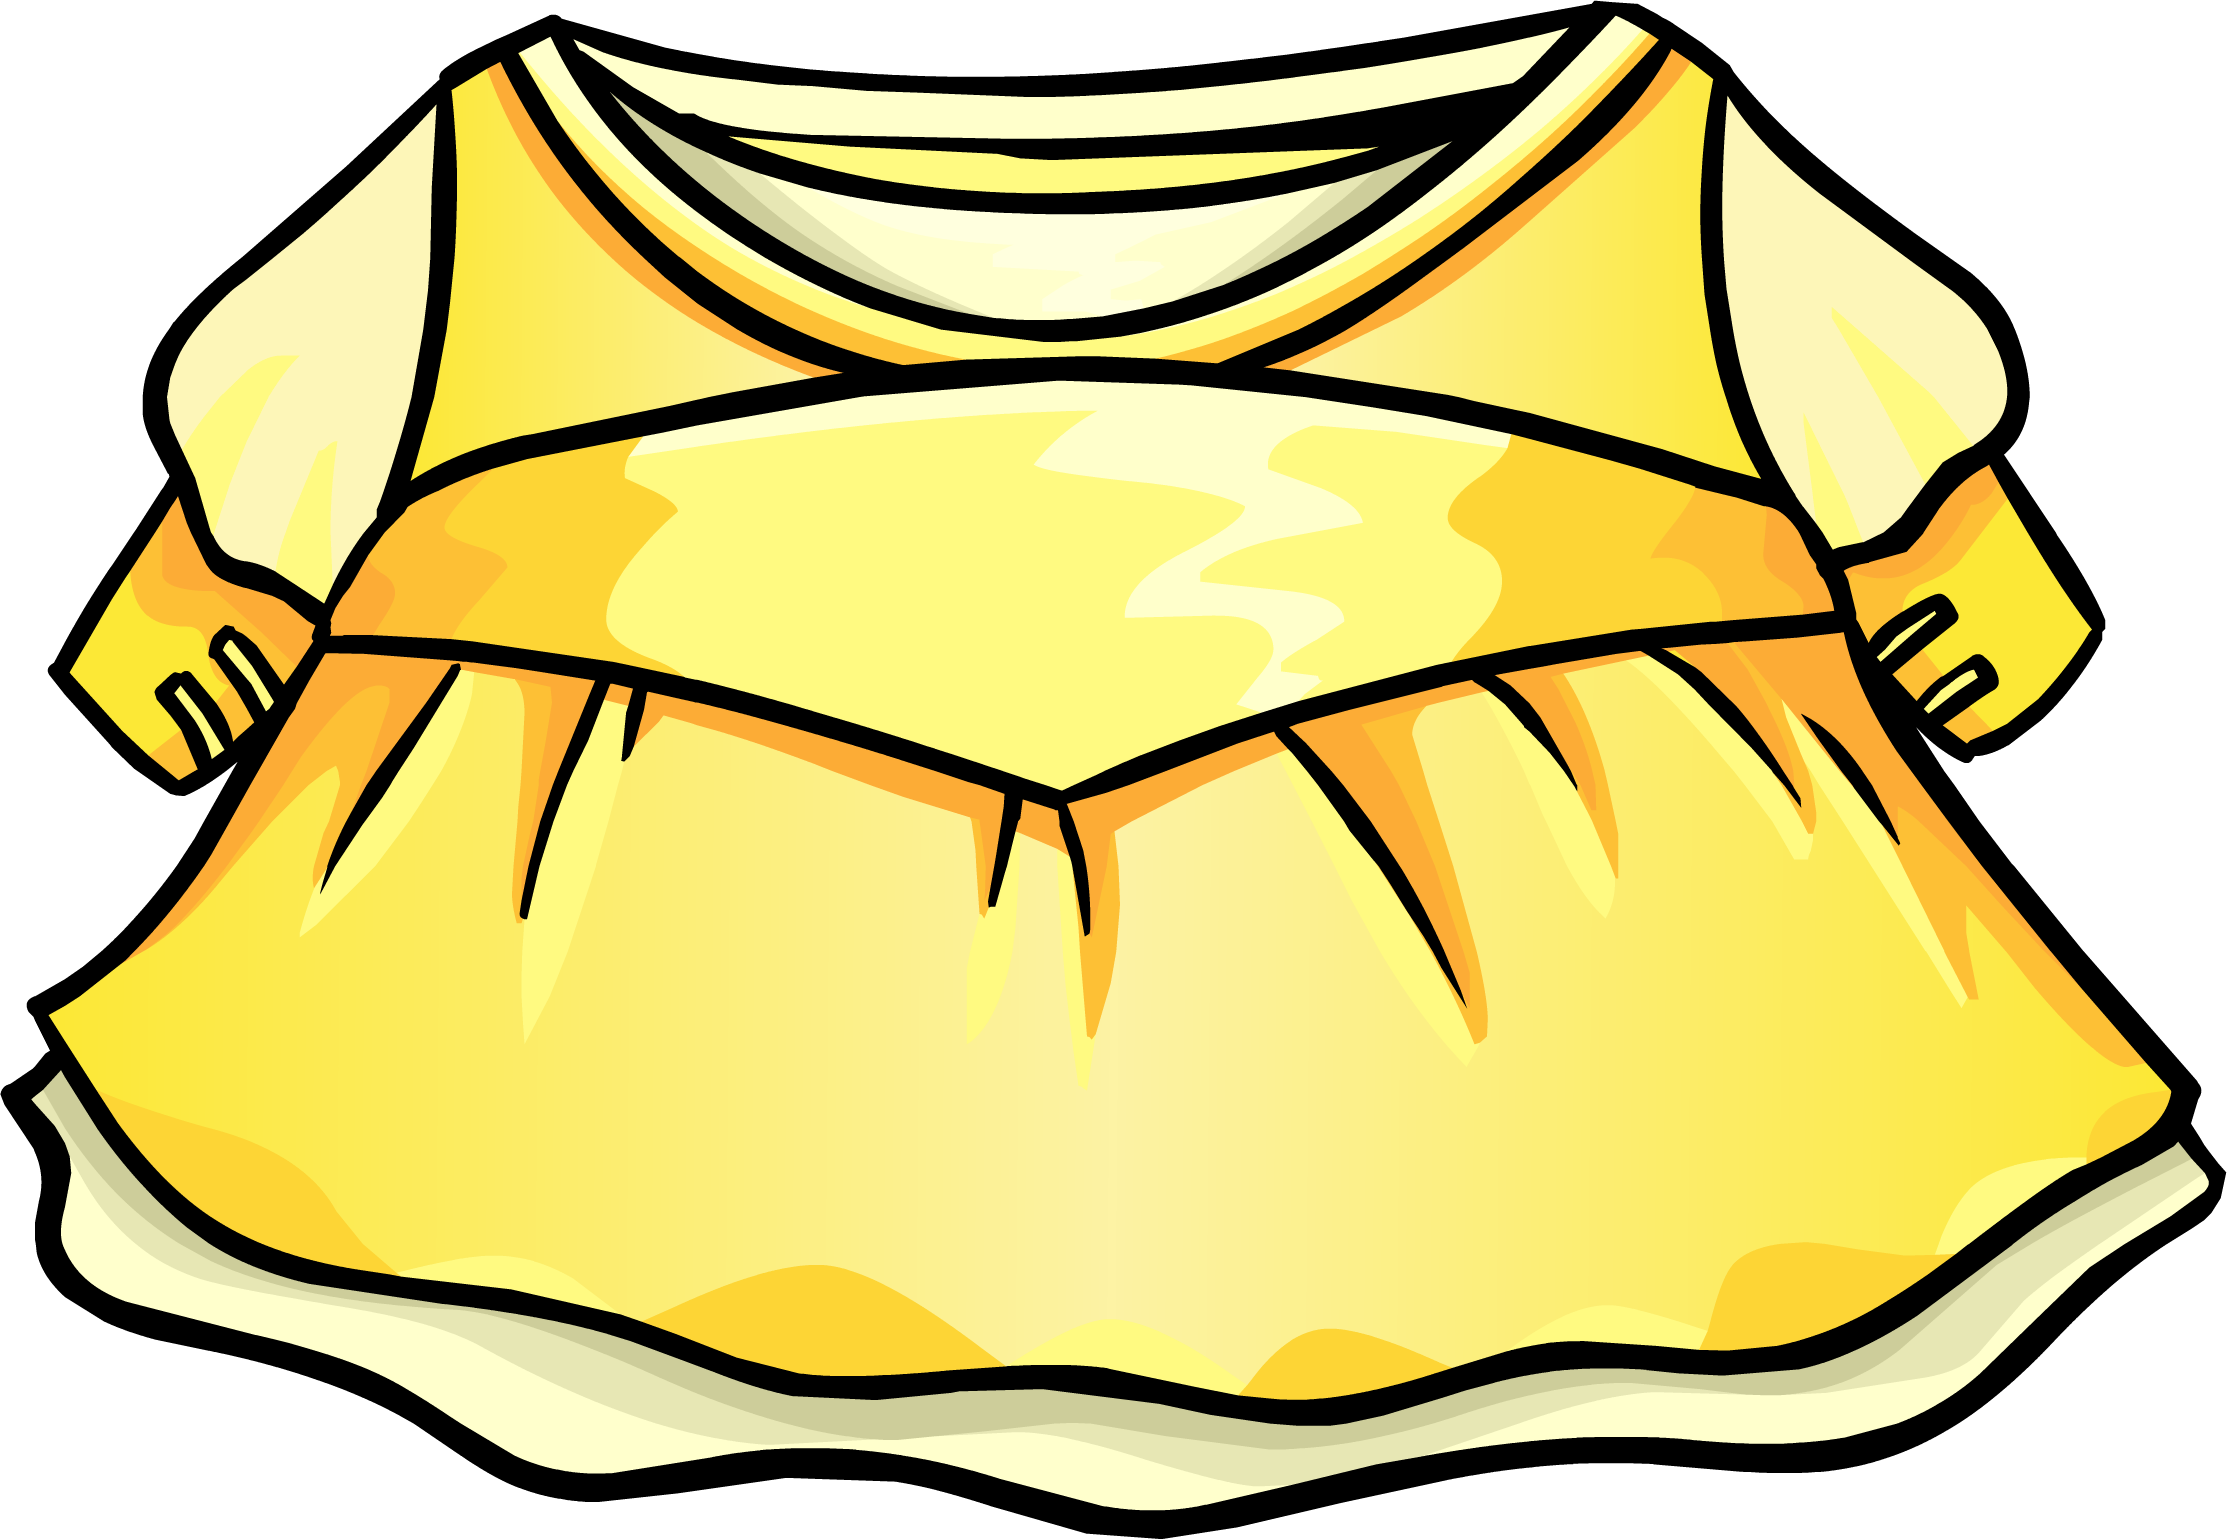 Club Penguin Yellow Summer Dress - Club Penguin Gold Dress (2227x1539)